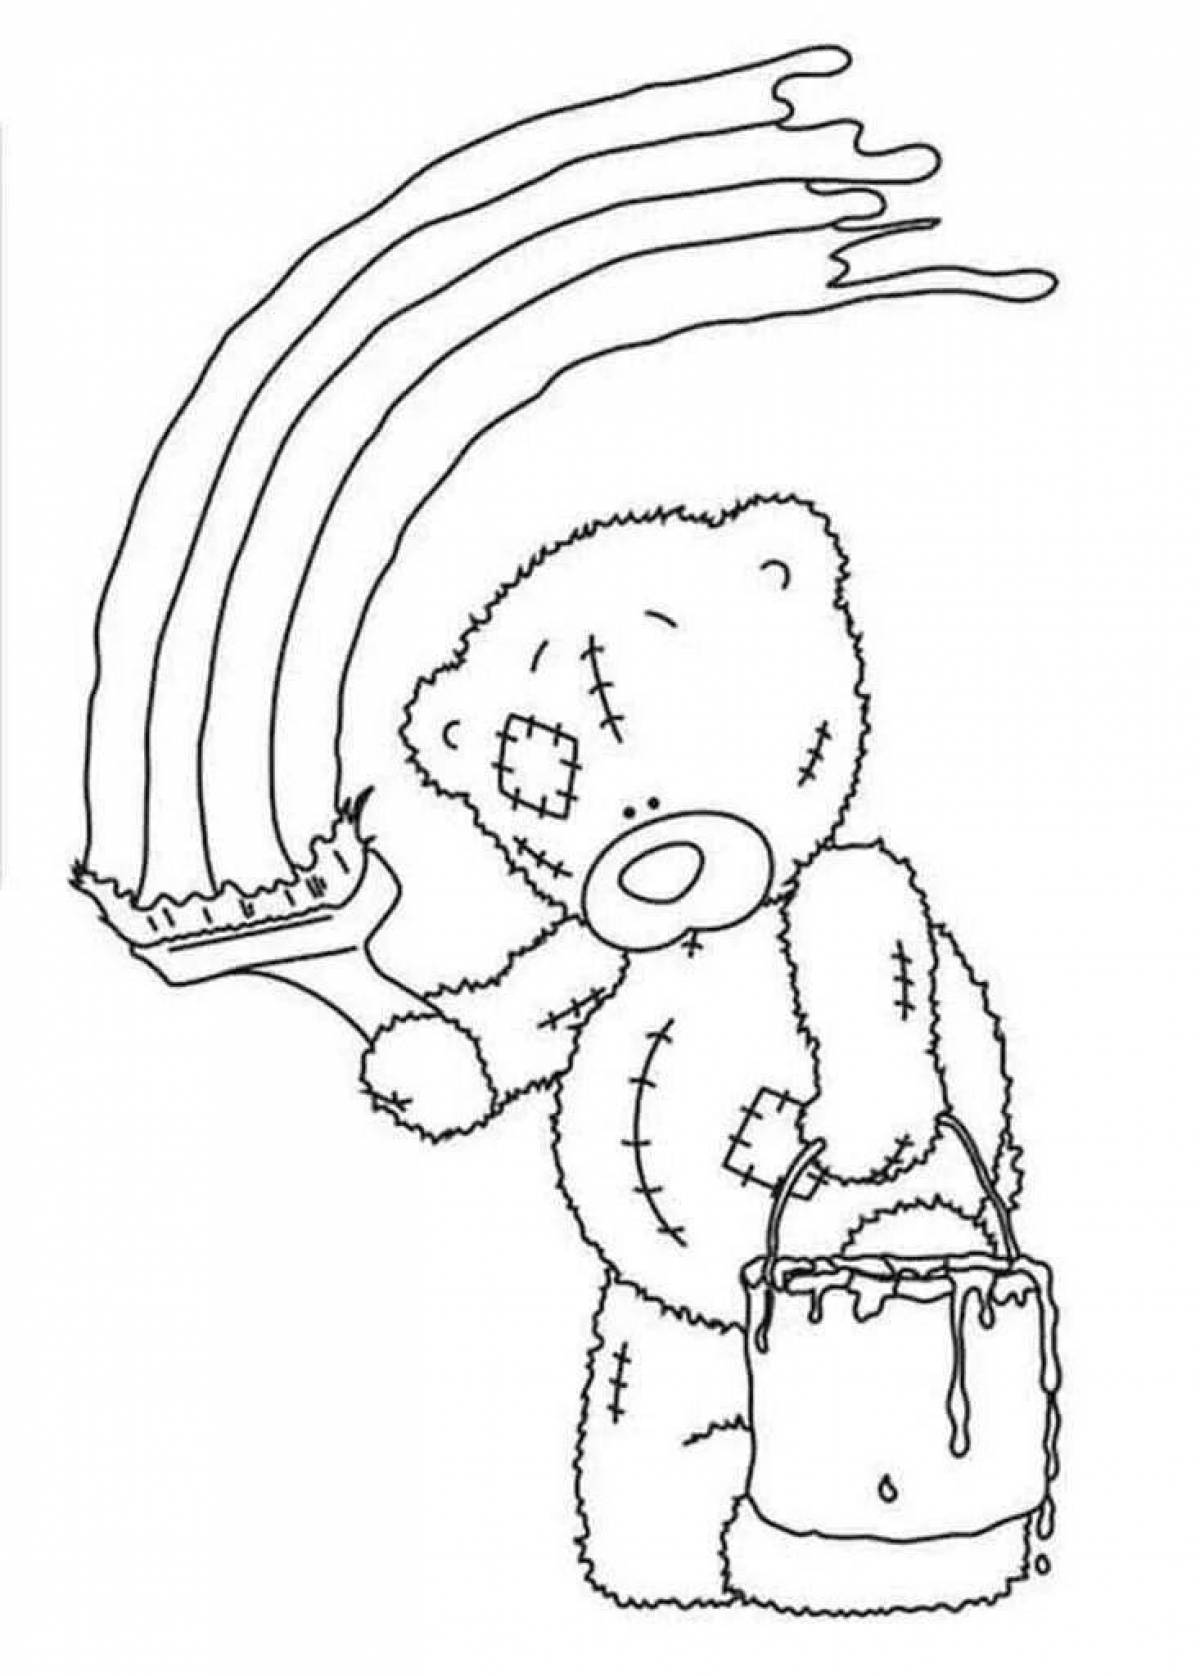 Teddy bear fun coloring book